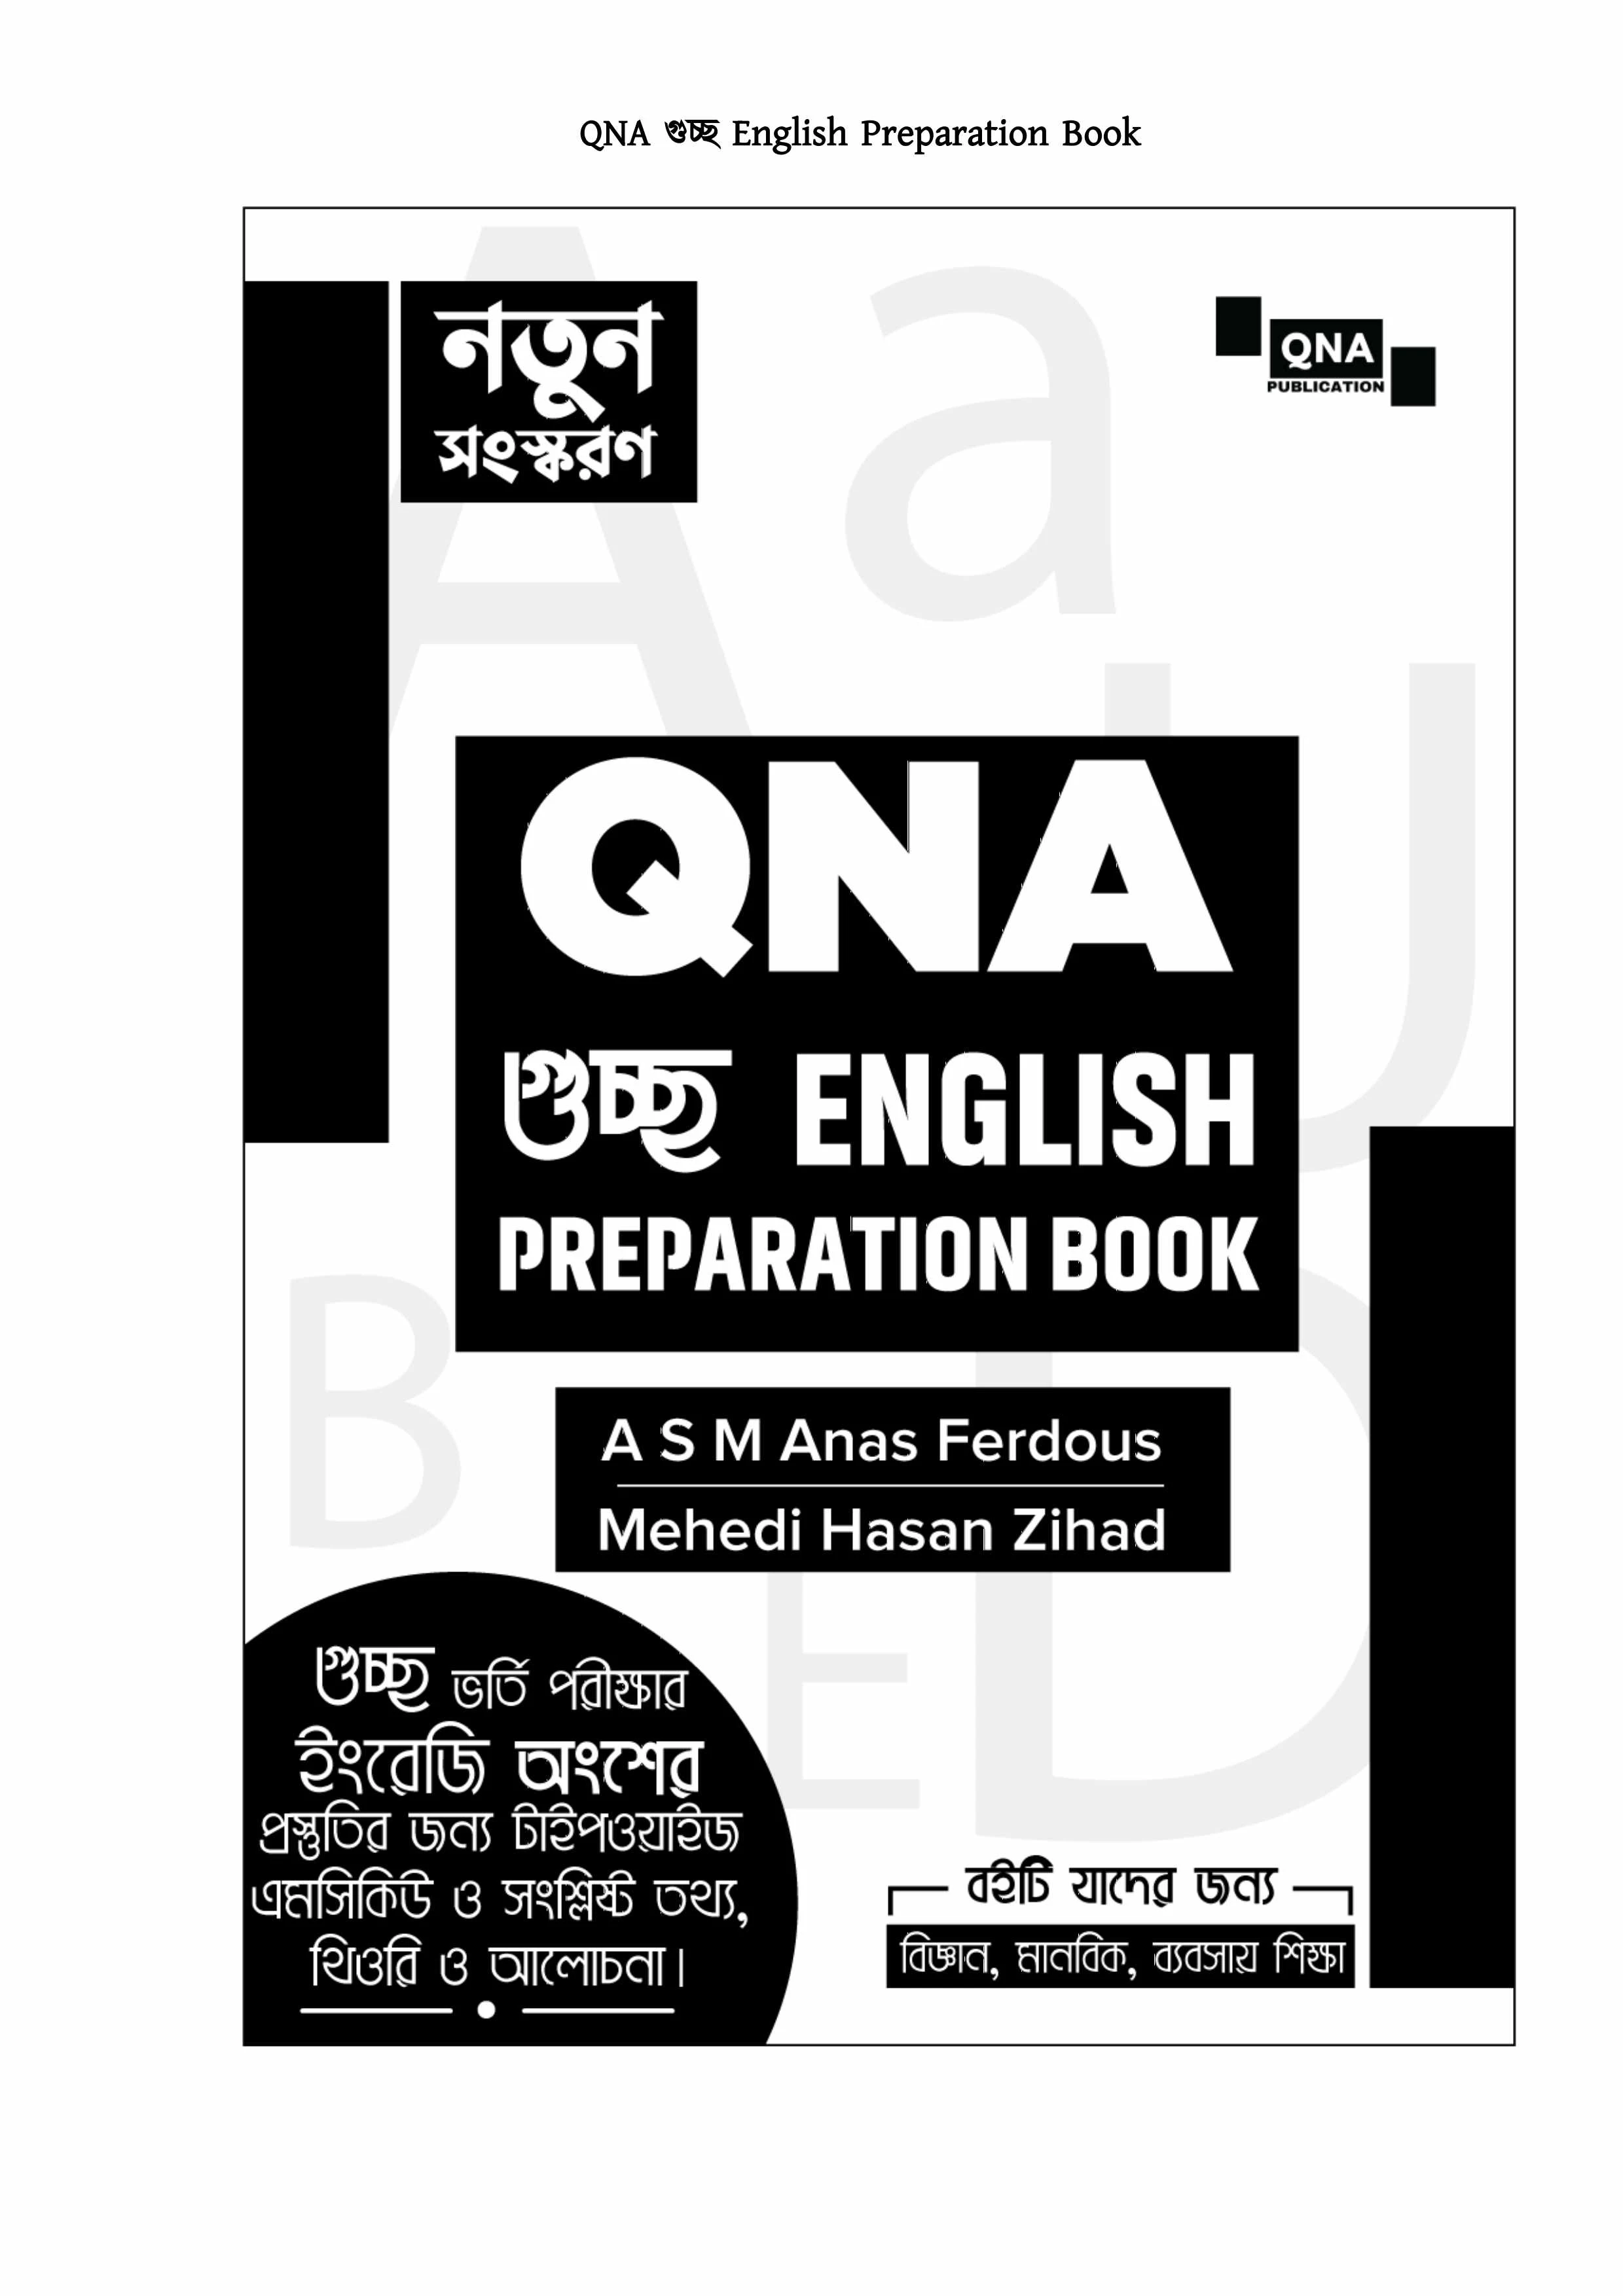 Qna gst english preparation book pdf free download